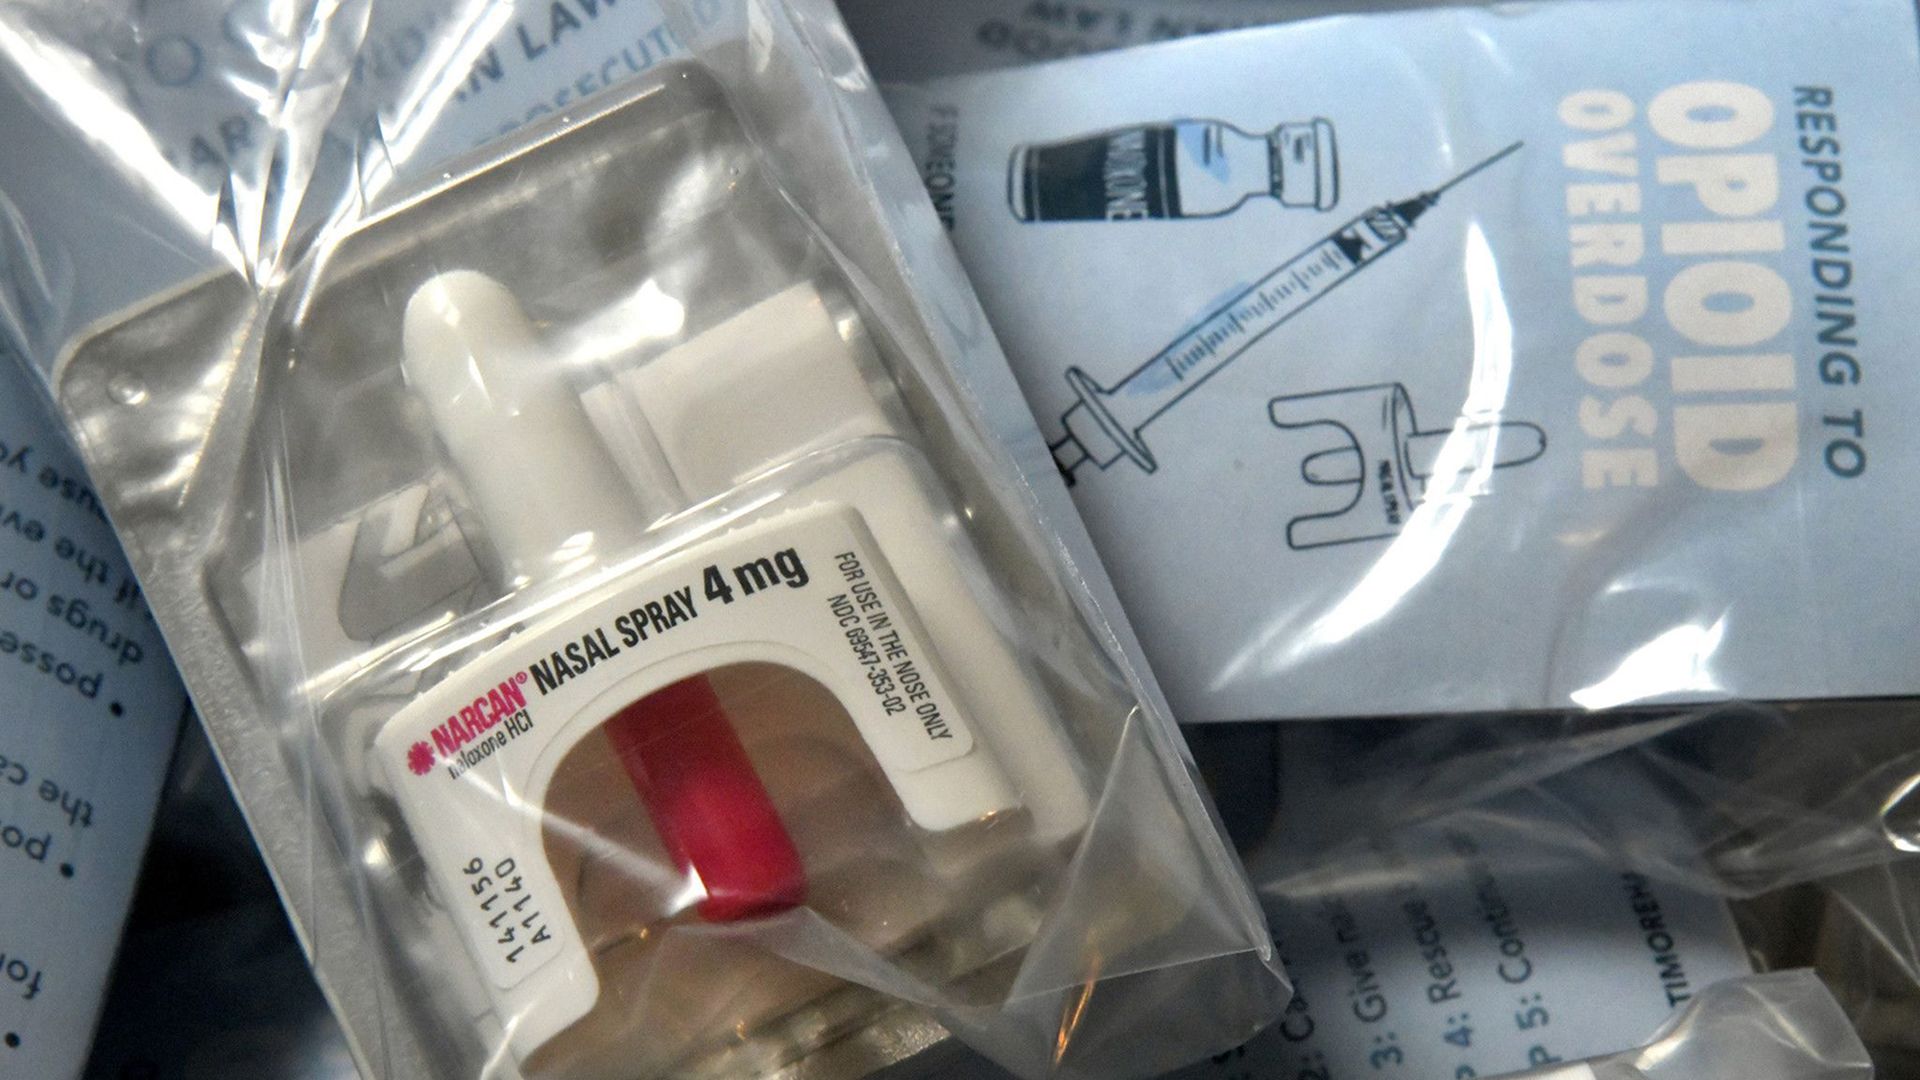 A Narcan kit